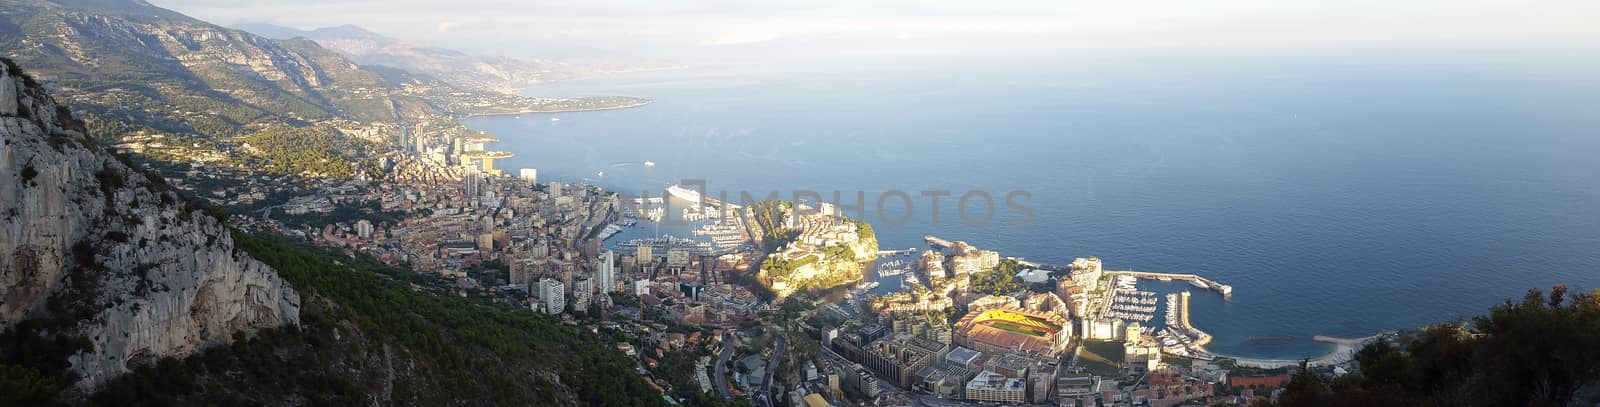 Beautiful Panoramic View of the Principality of Monaco and the Mediterranean Sea